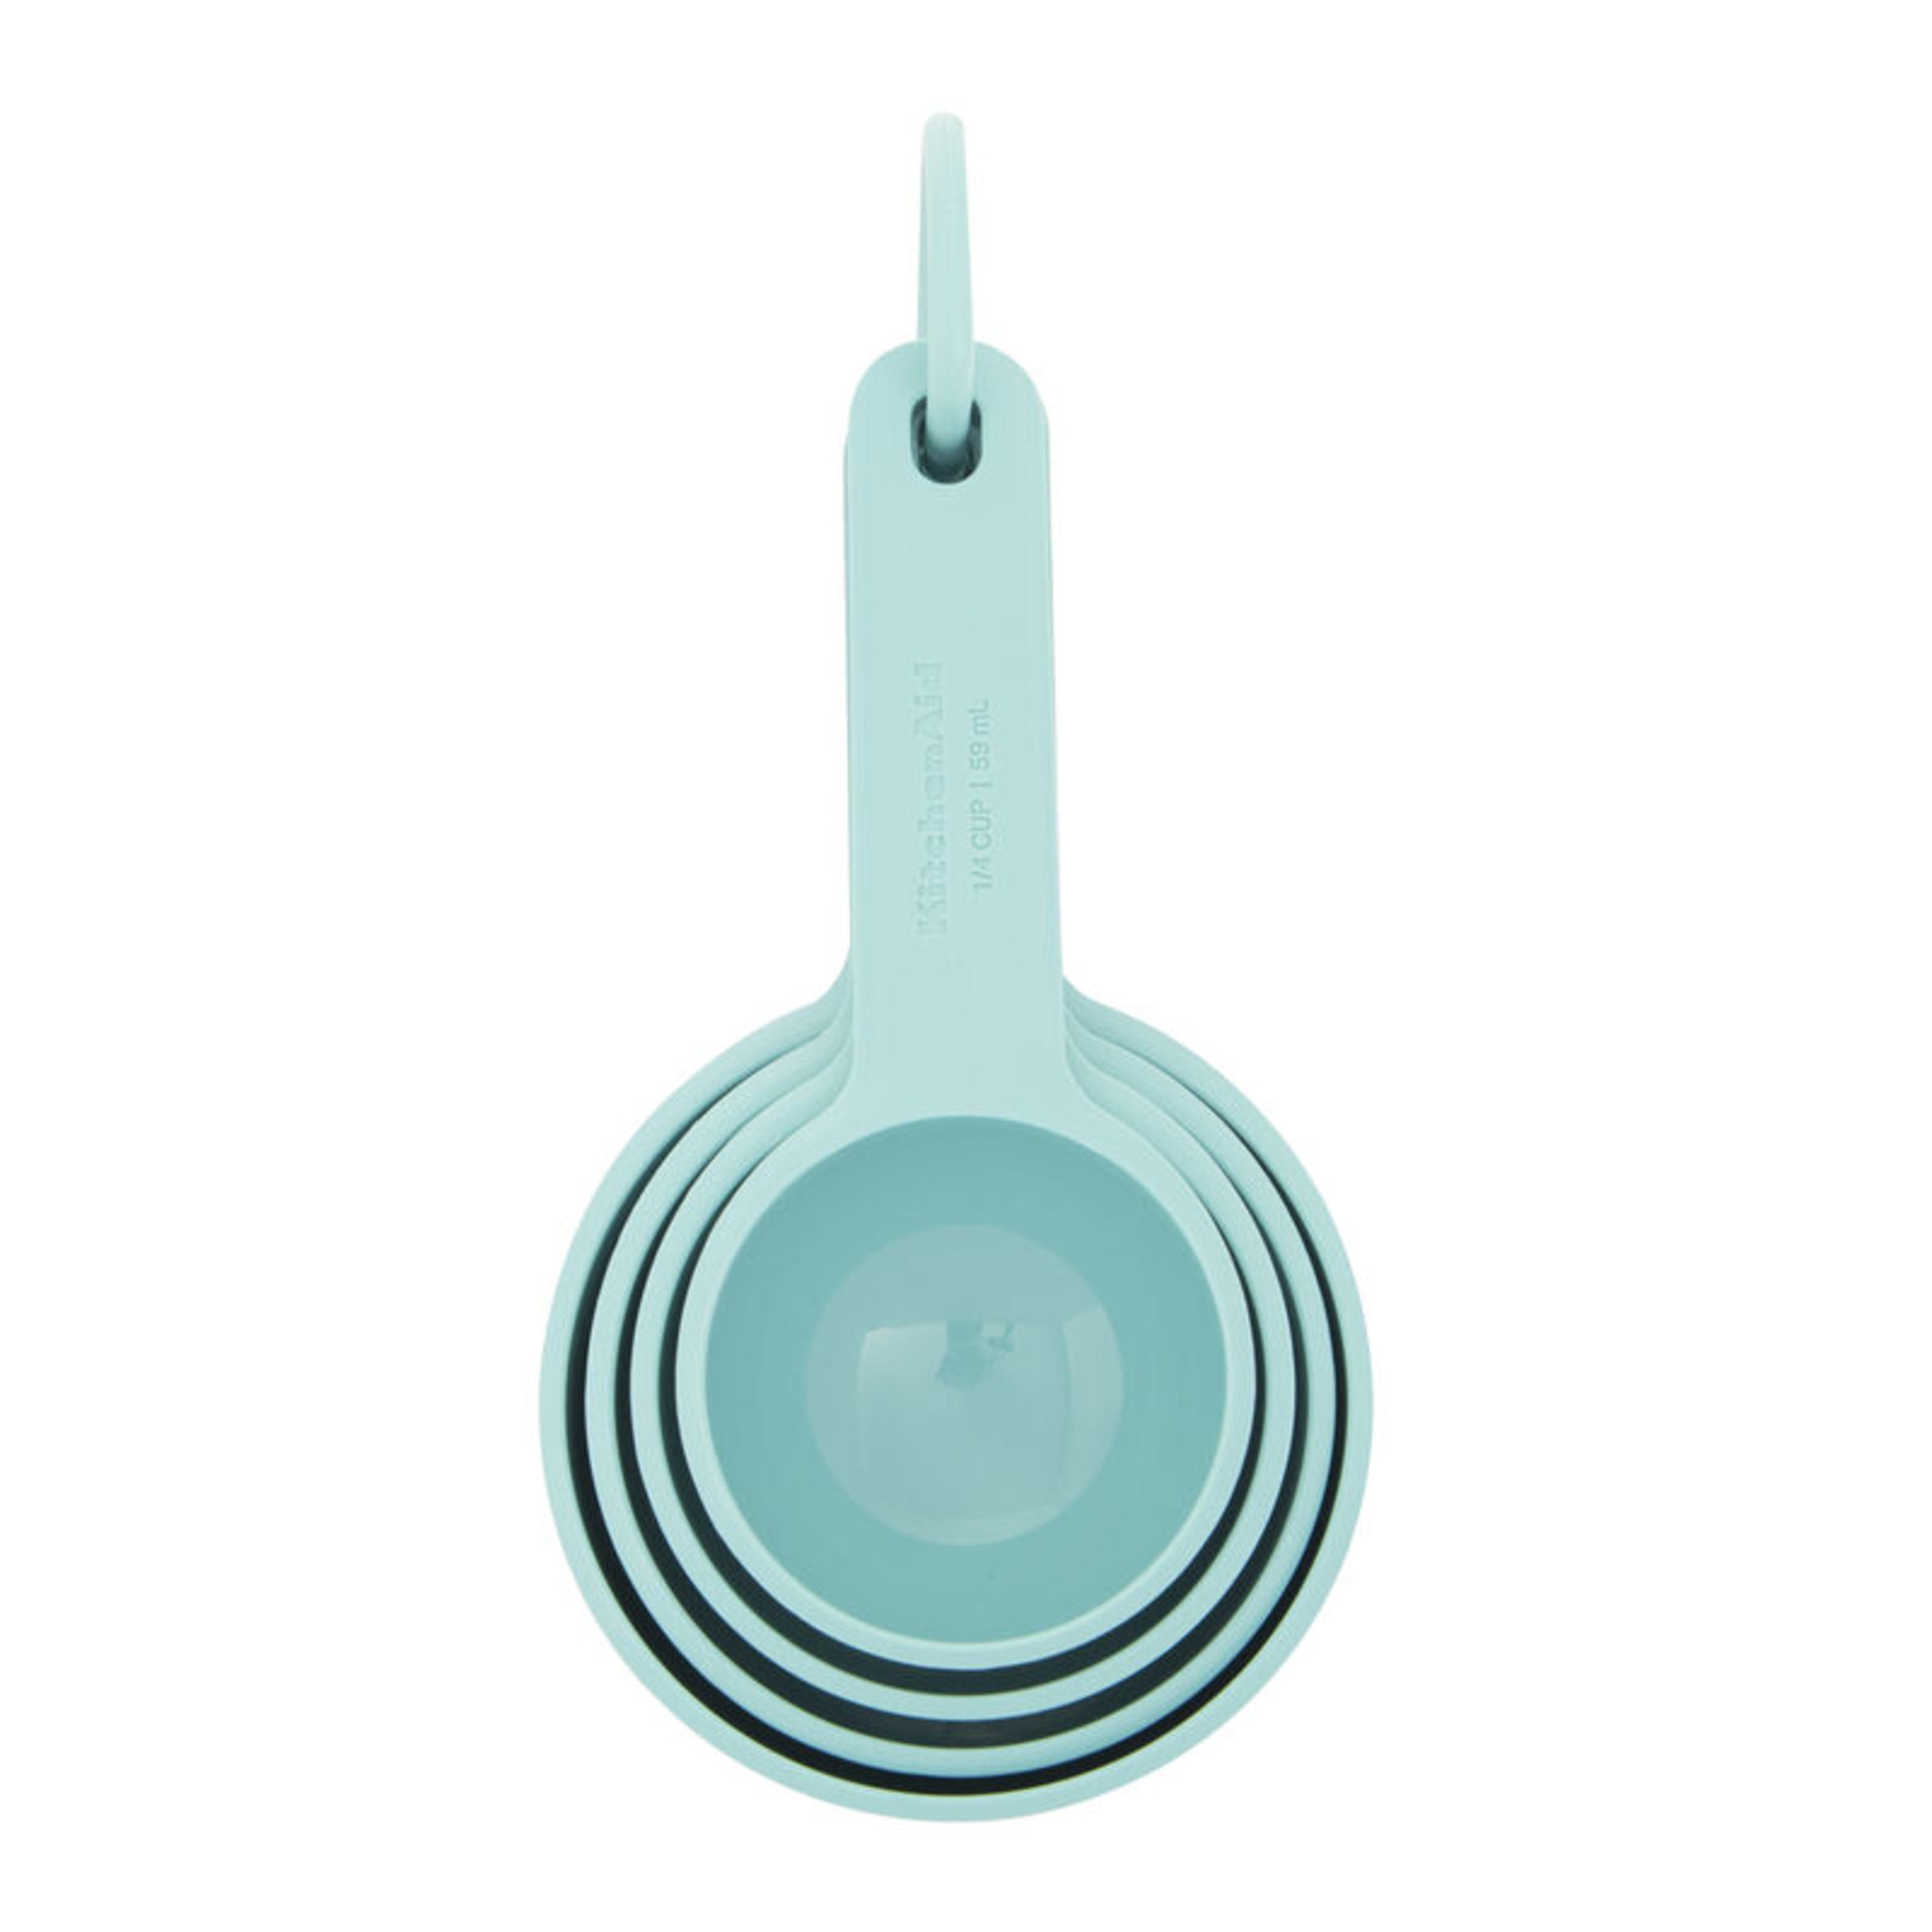 KitchenAid Aqua Sky Measuring Cup and Spoon Set